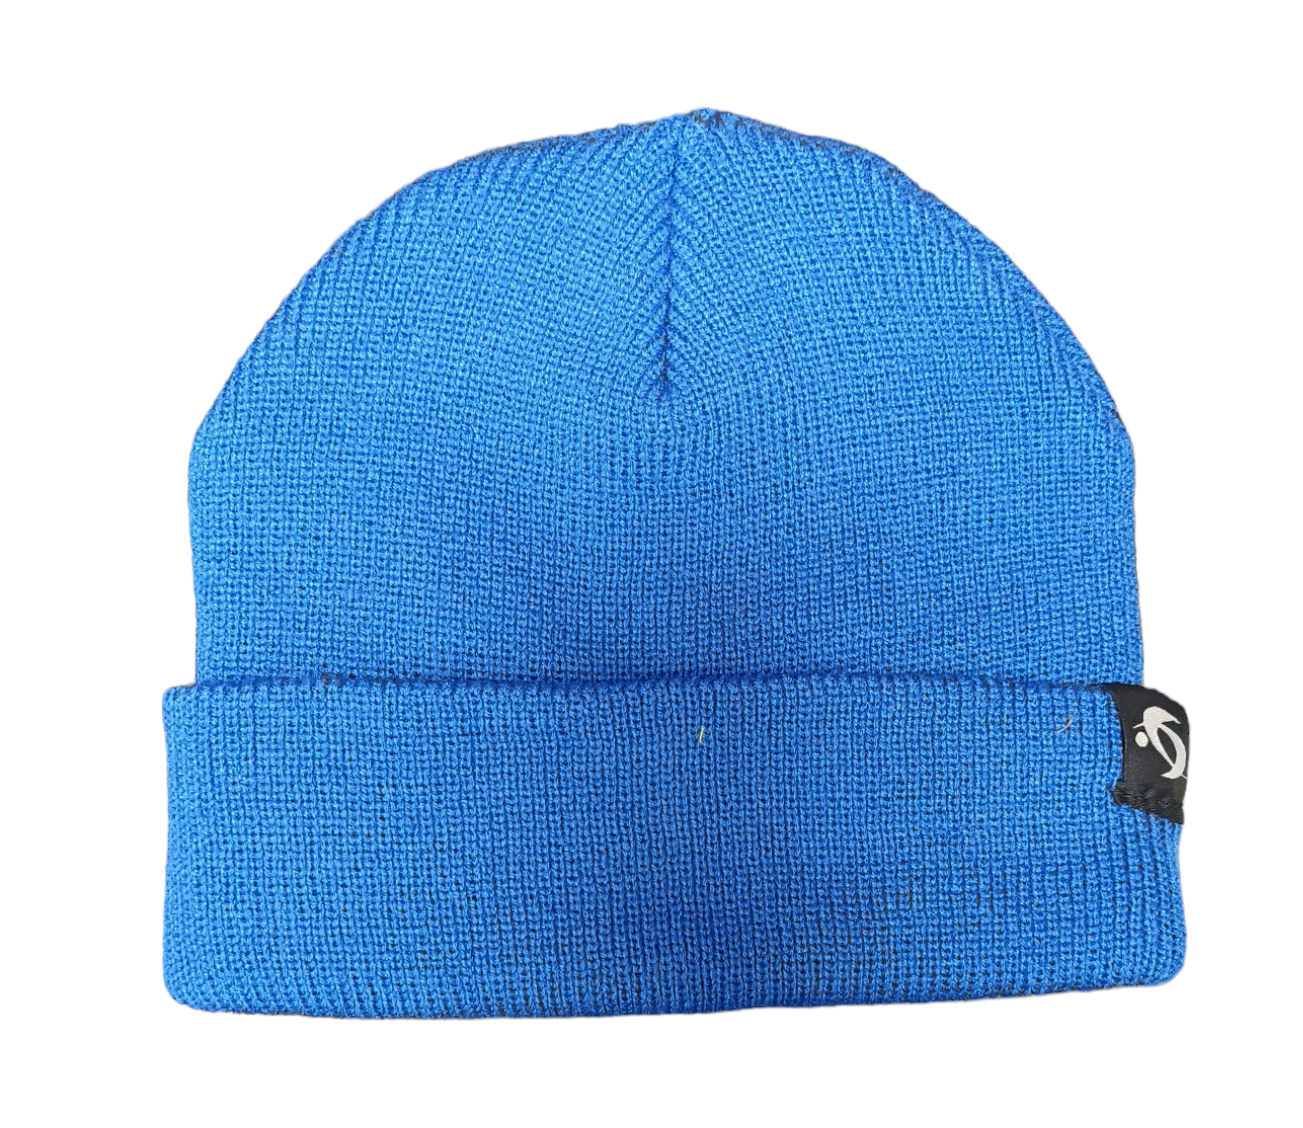 PREMIER SPORTS CUFF HAT - BLUE